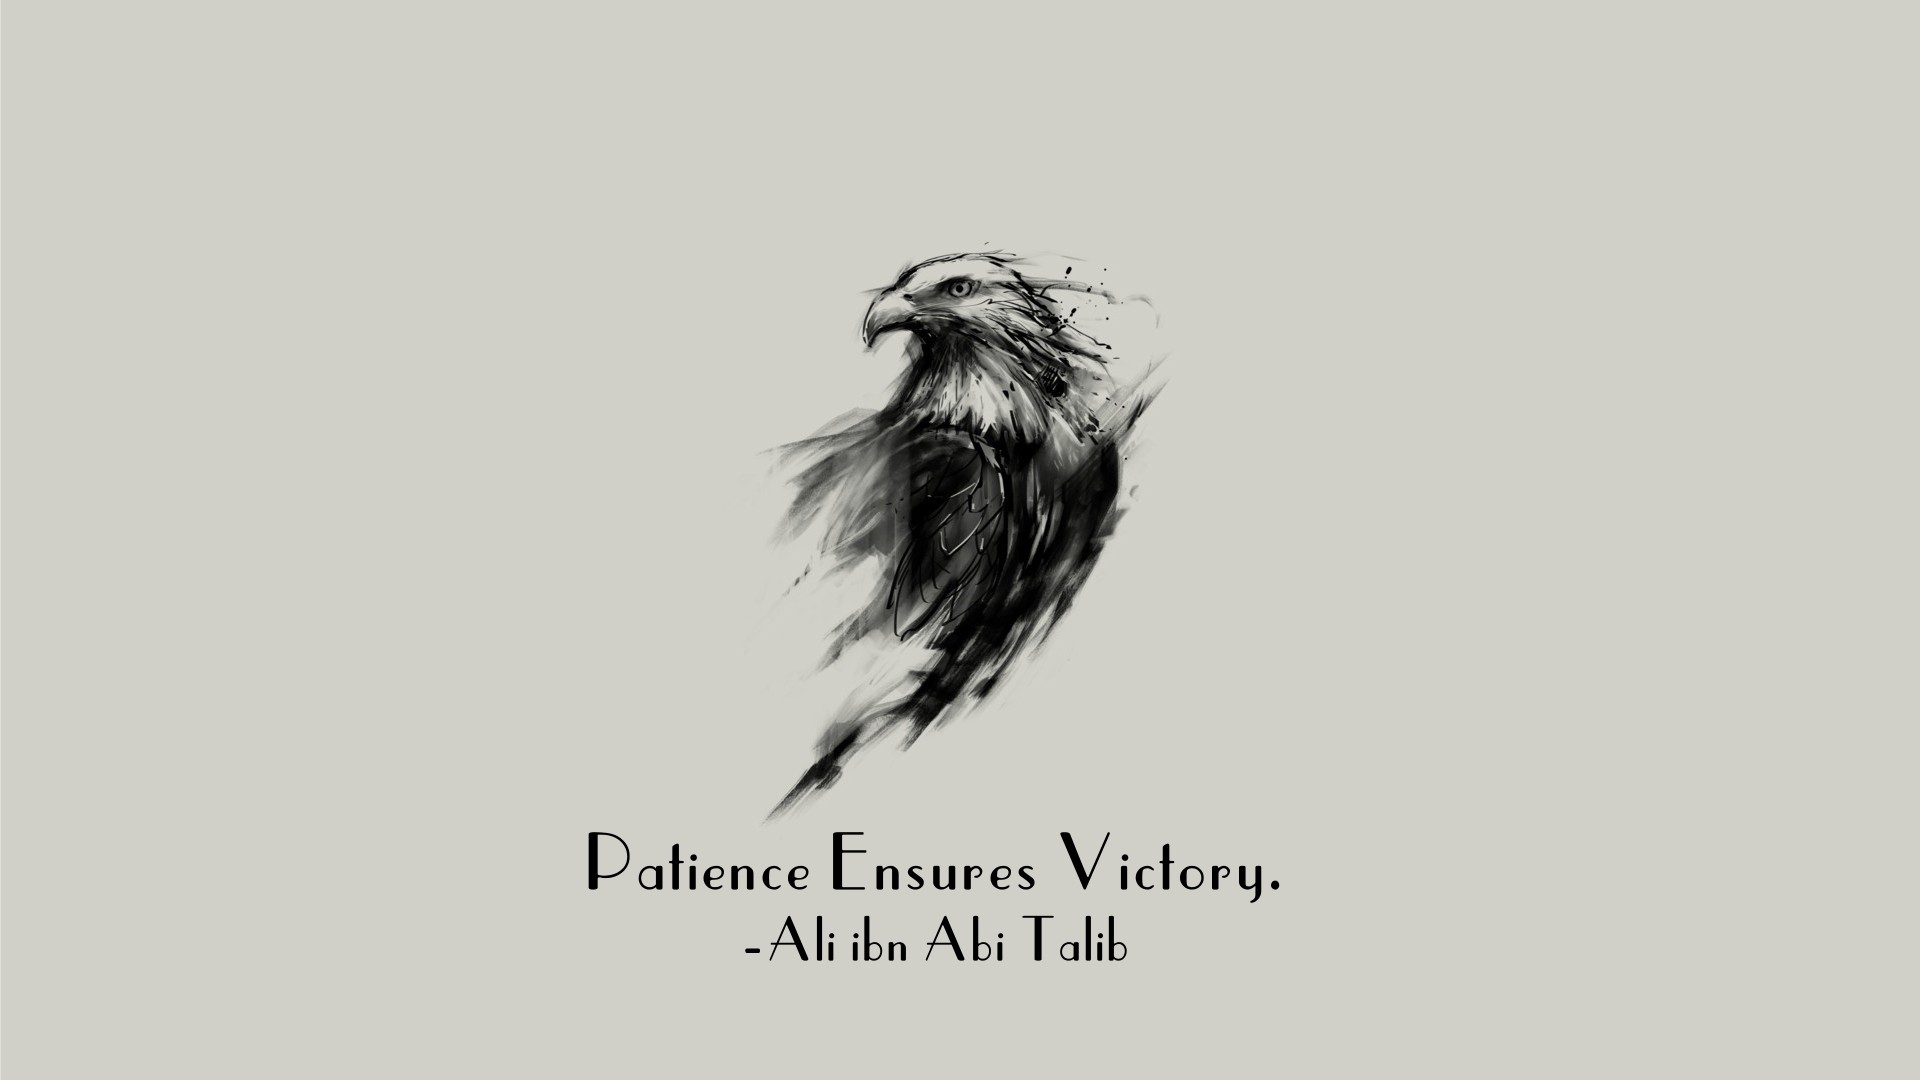 General 1920x1080 Ali ibn Abi Talib Islam Imam quote eagle motivational birds